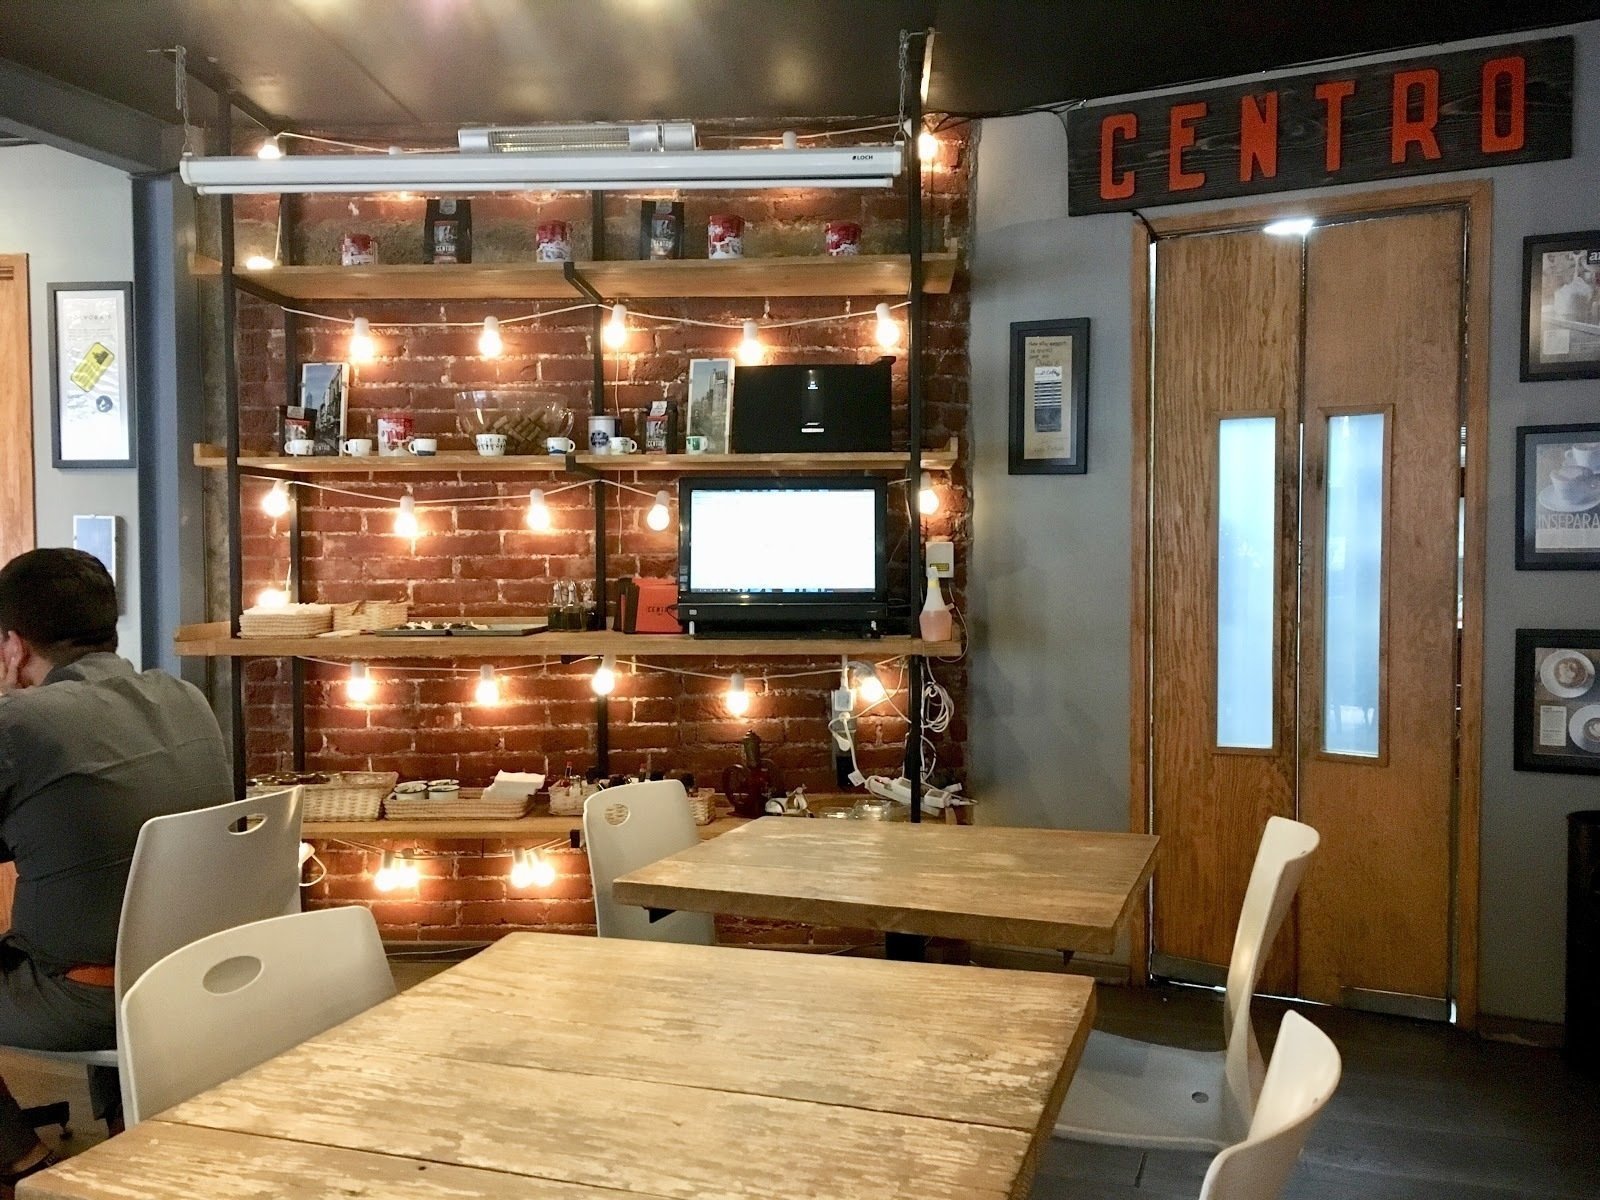 Café Centro: A Work-Friendly Place in Mexico City